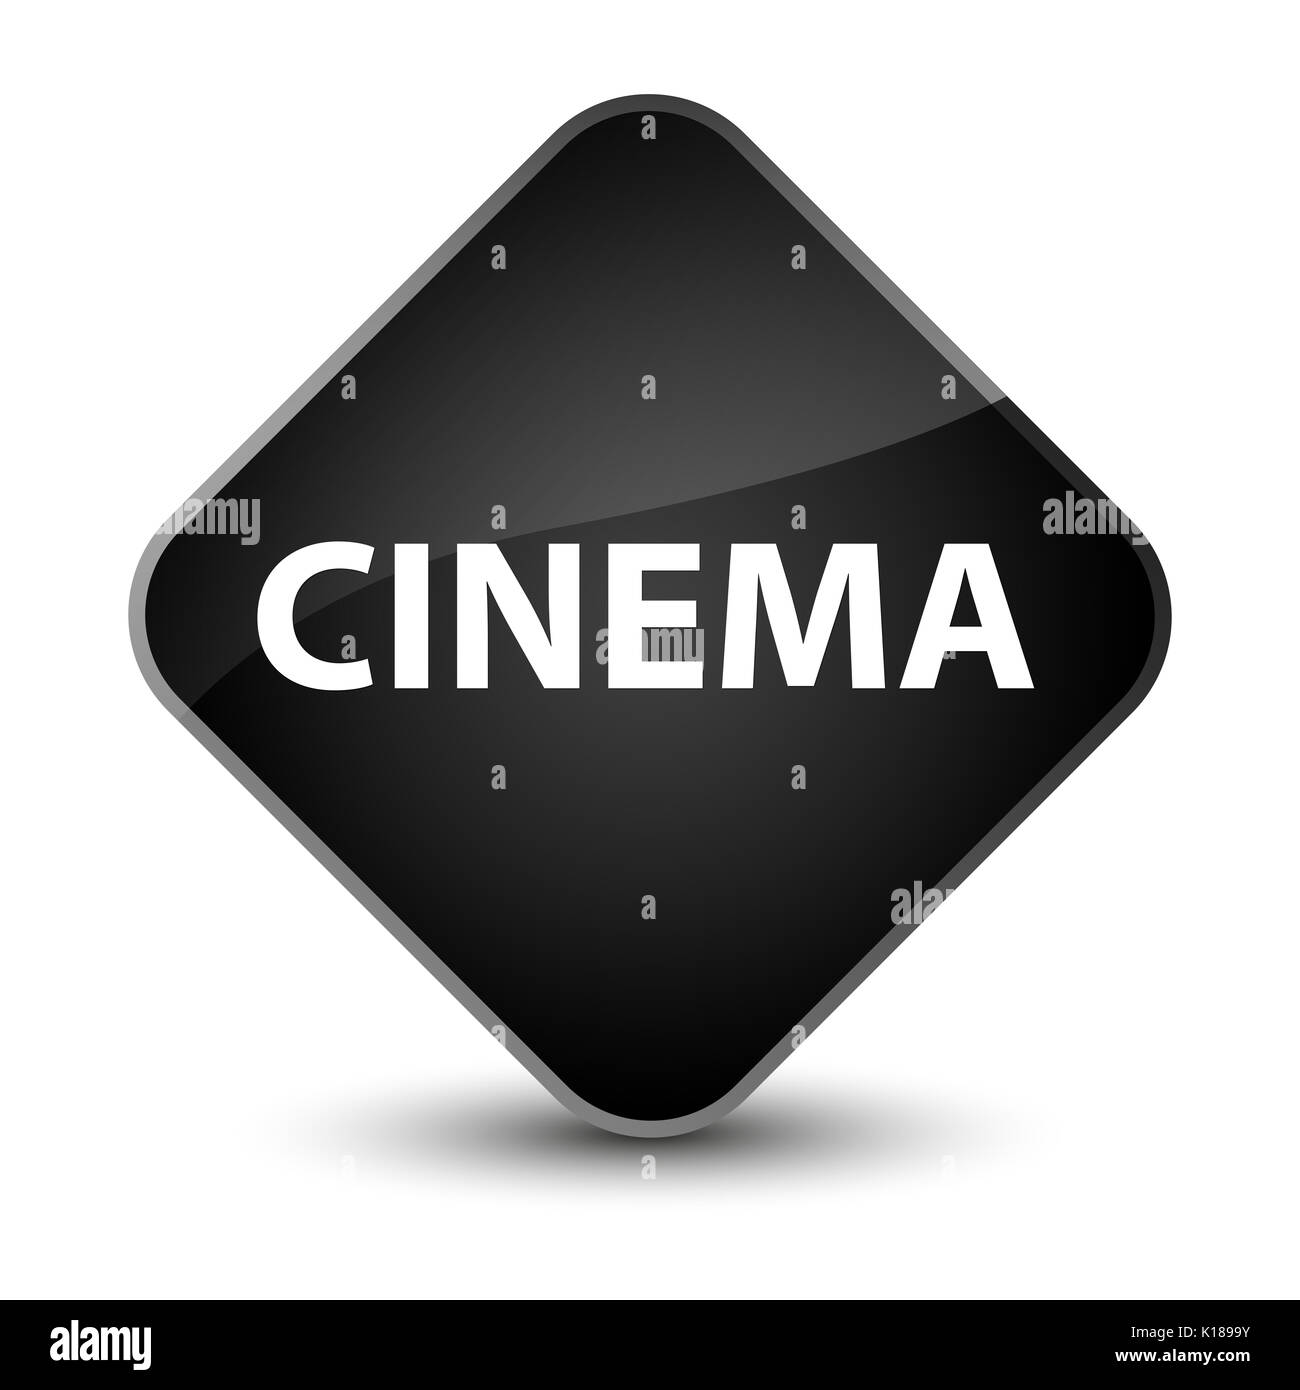 Cinema isolated on elegant black diamond button abstract illustration Stock Photo